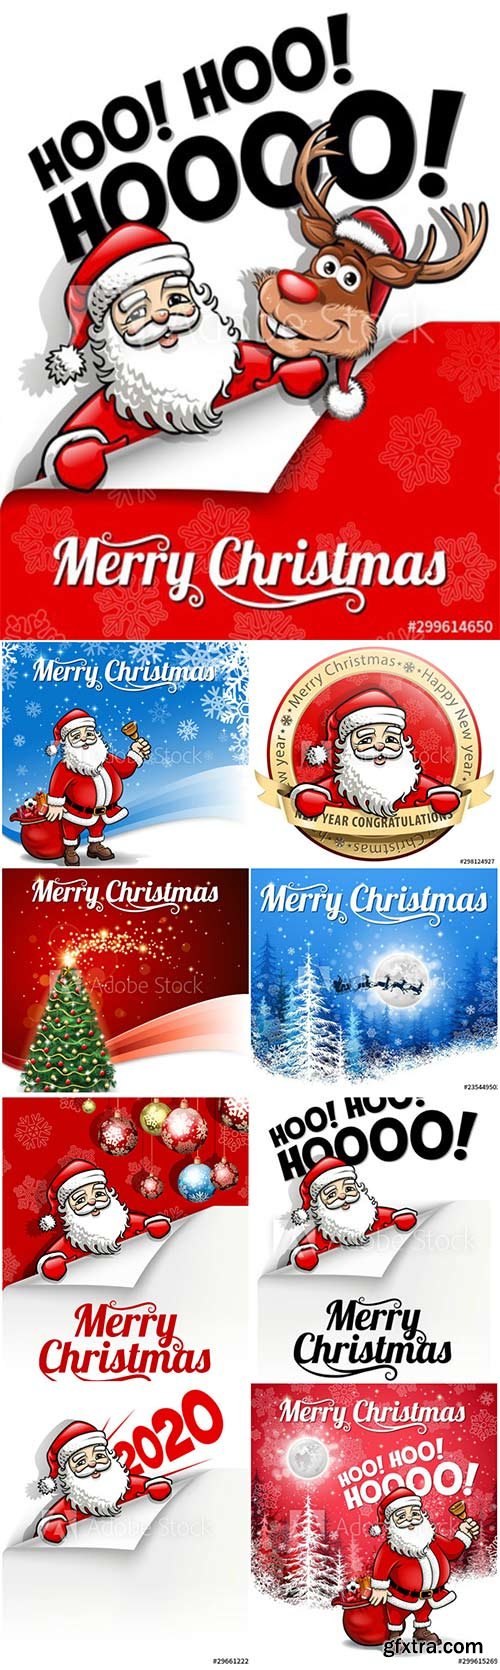 Santa\'s Christmas snowy greeting, Merry Christmas card